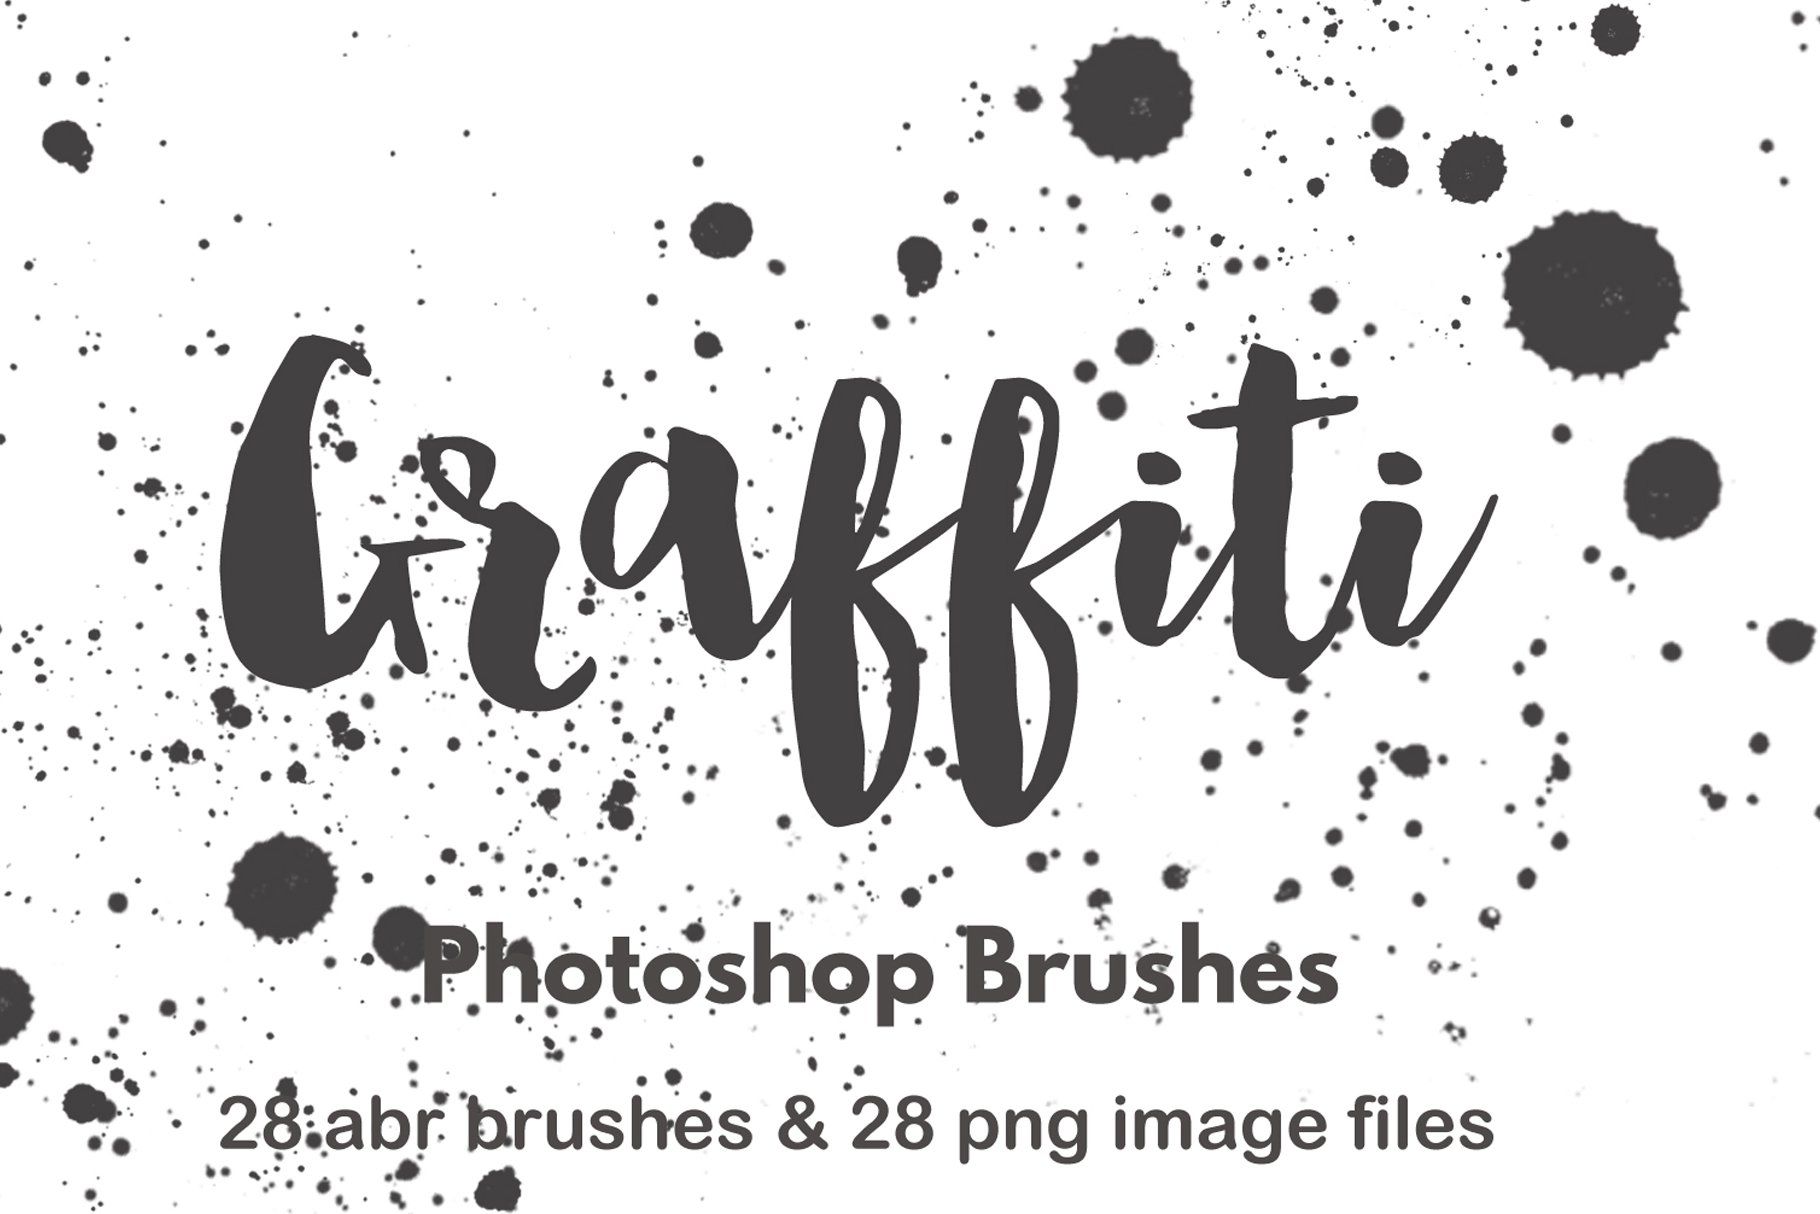 Paint splatter photoshop brush setpreview image.